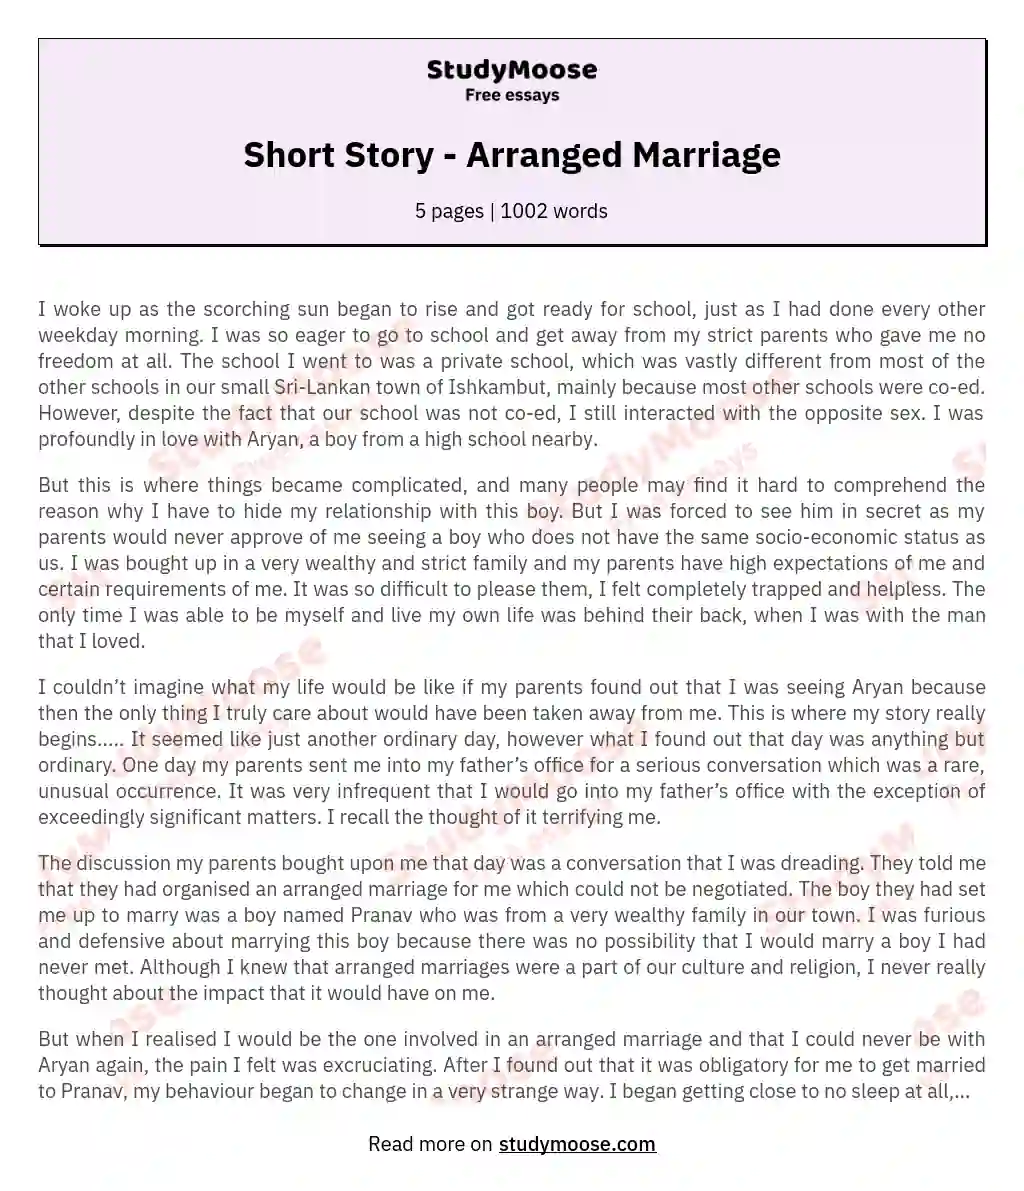 Short Story - Arranged Marriage essay